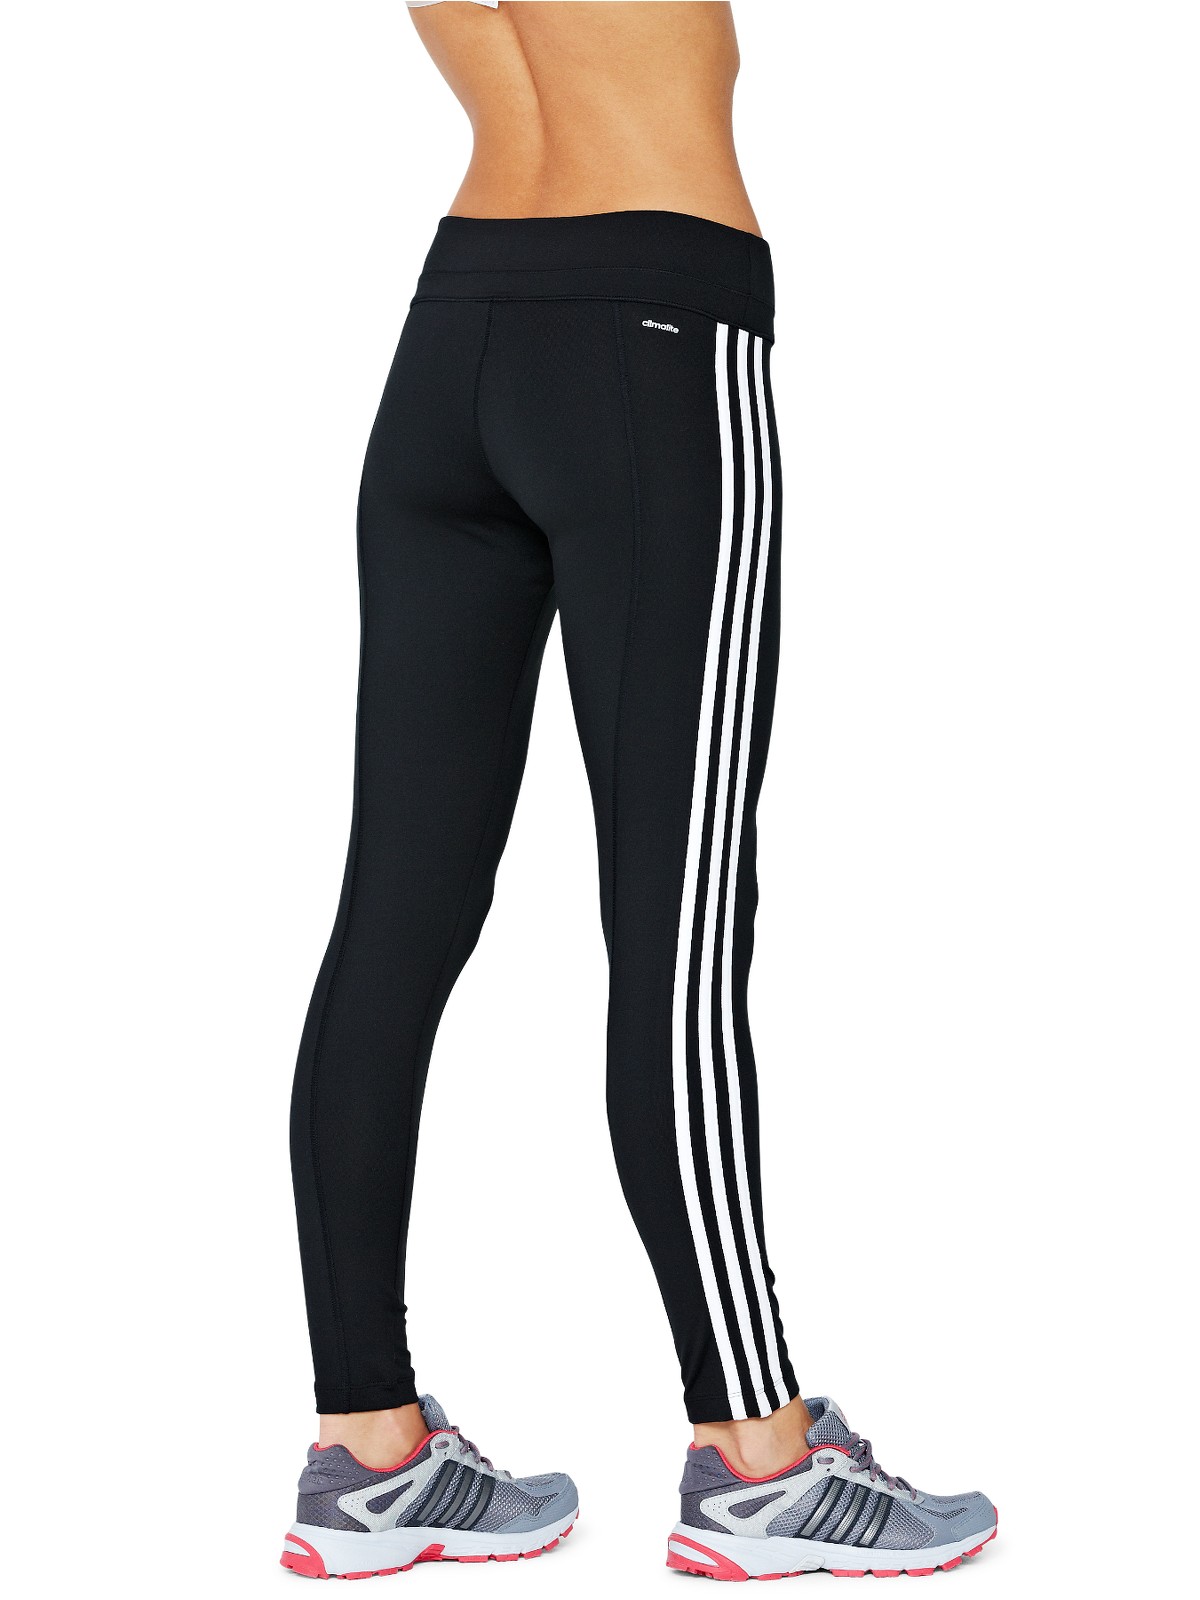 Adidas Adidas Mf 3 Stripe Tights in Black (black/white) | Lyst